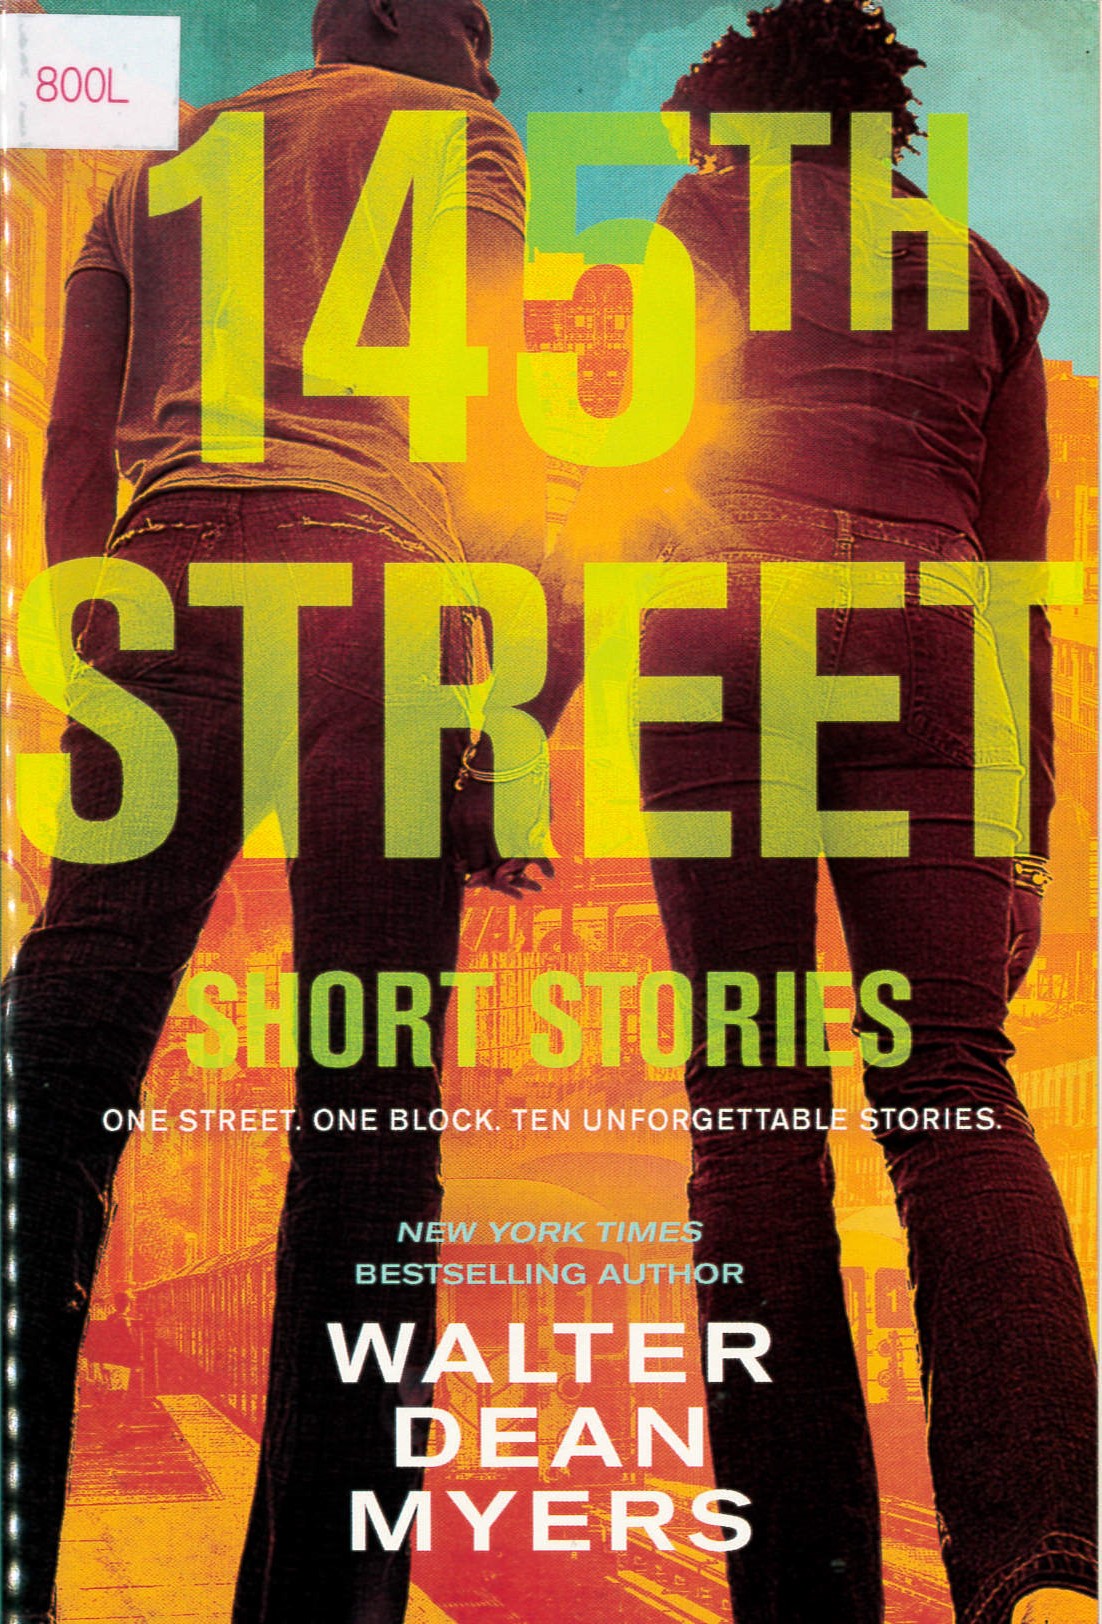 145th Street : short stories /